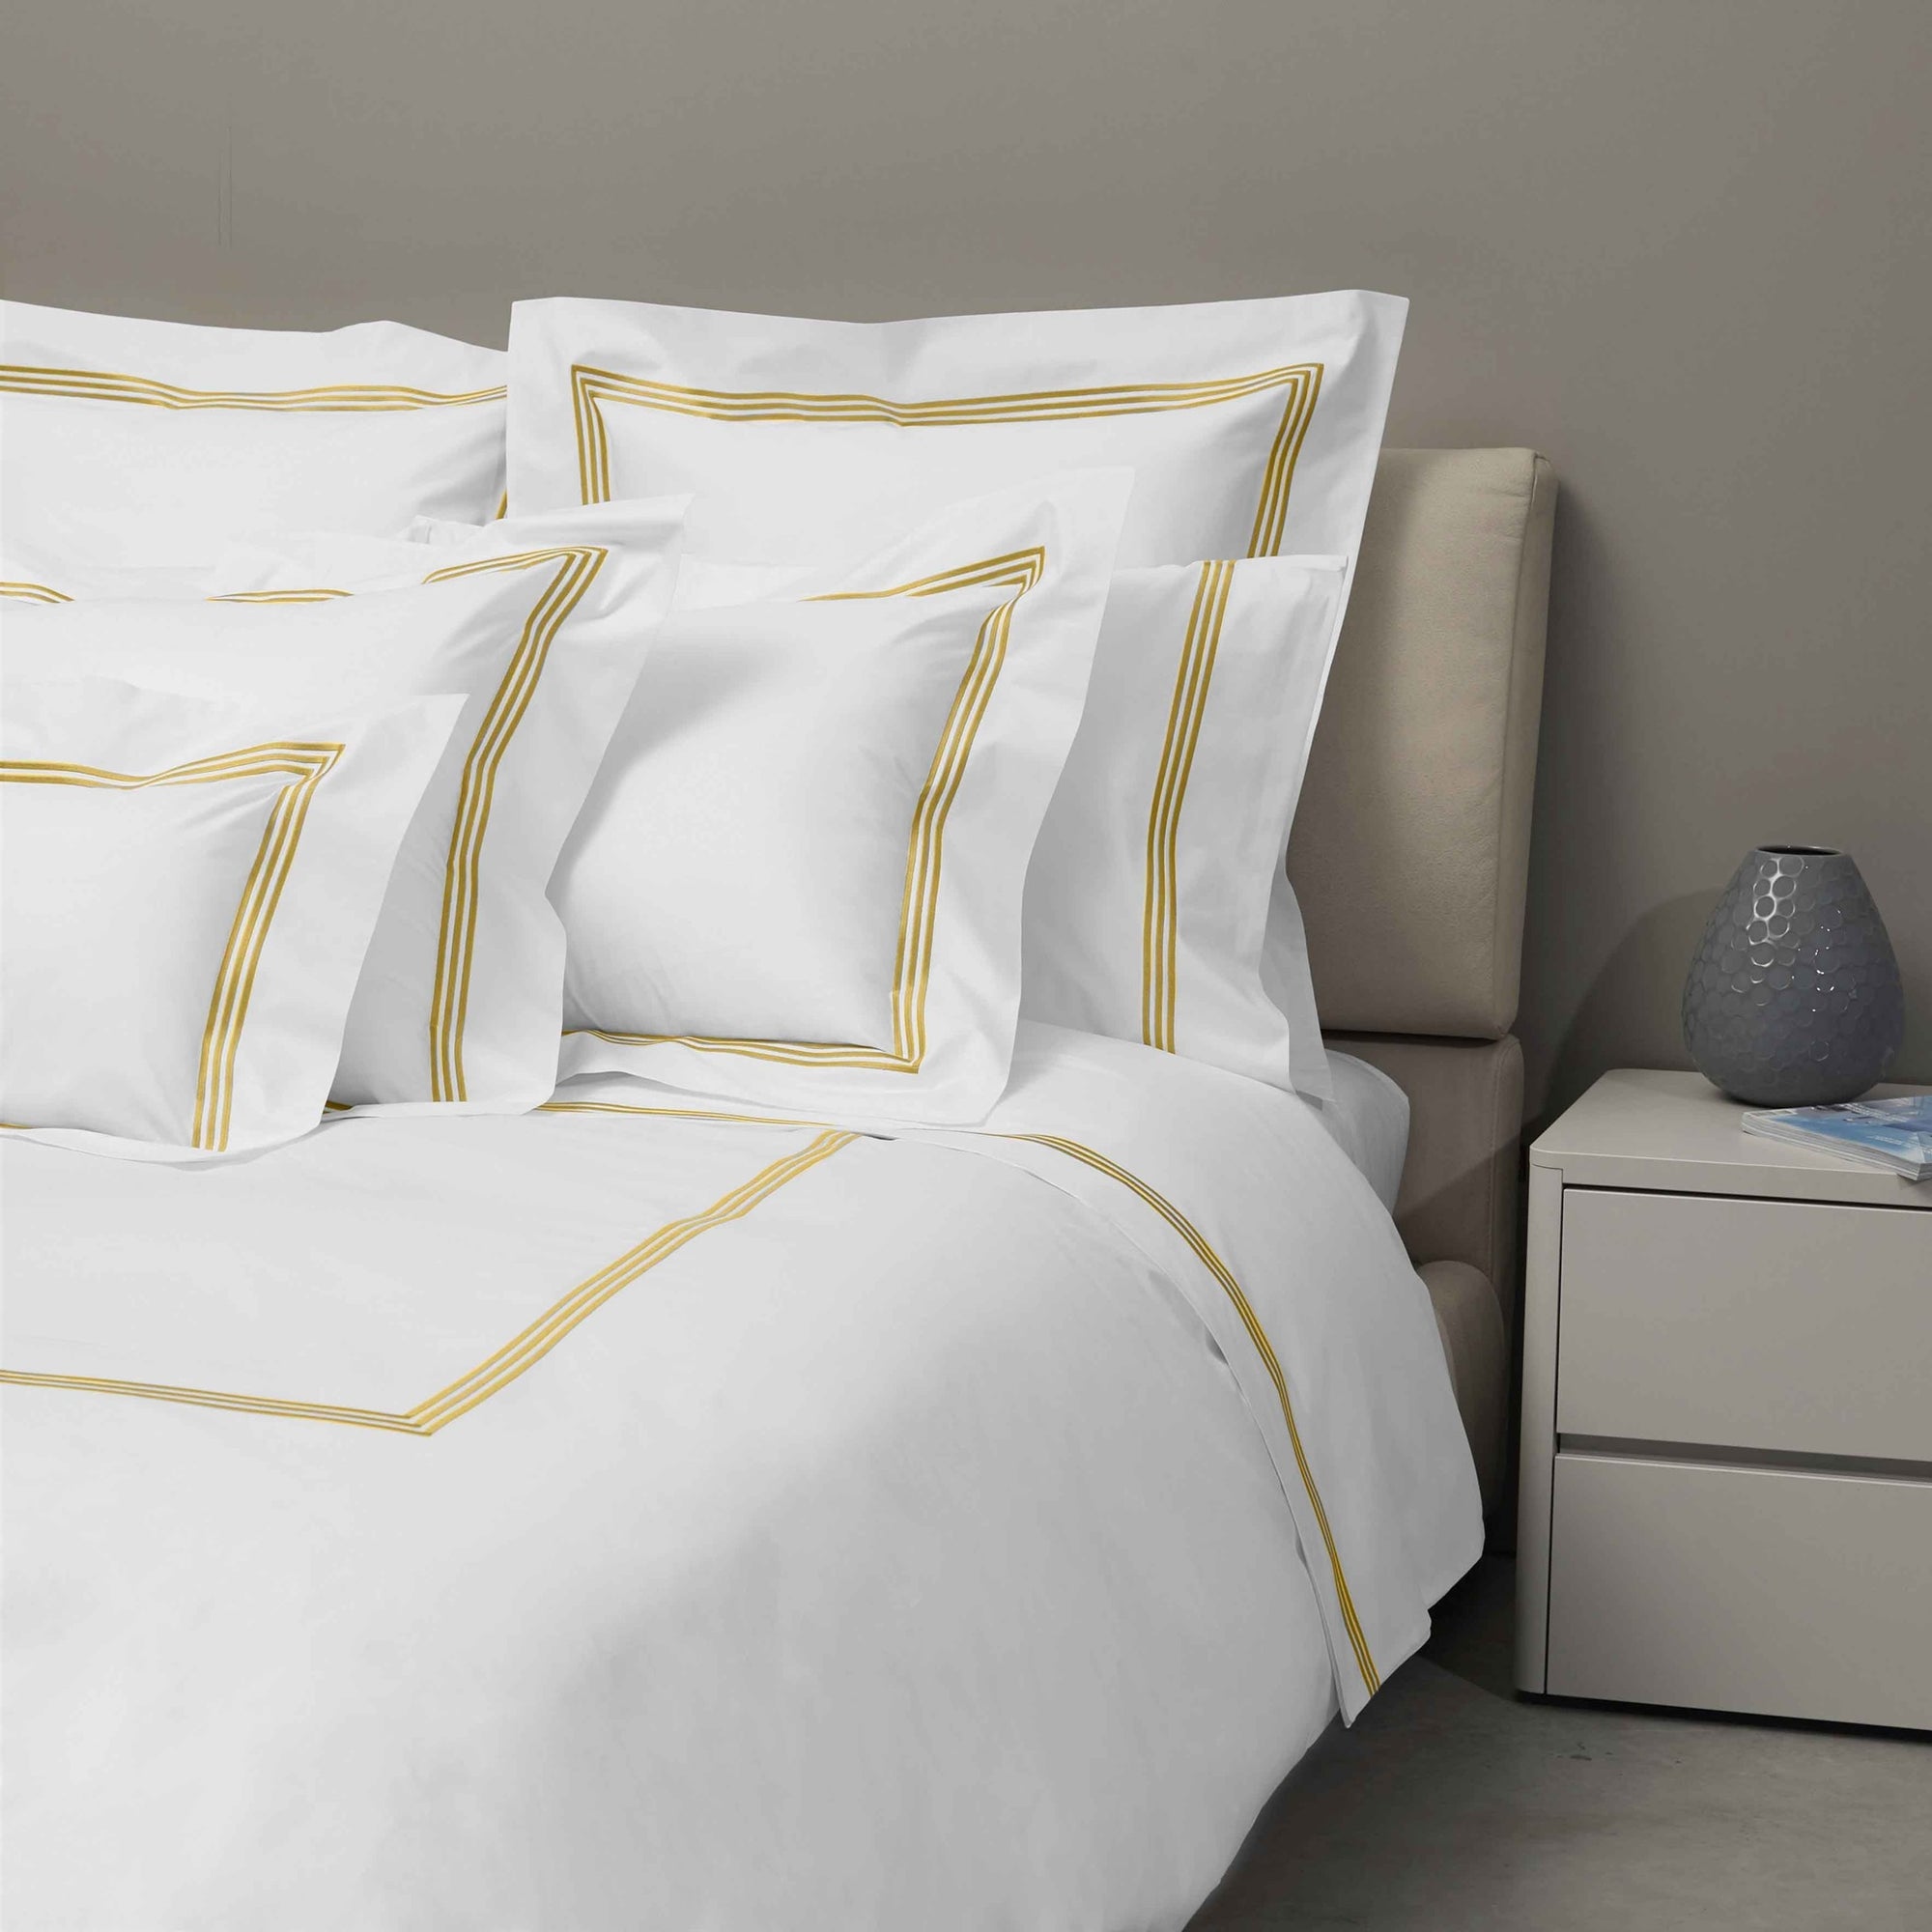 Bed Dressed in Signoria Platinum Percale Bedding in White/Gold Color